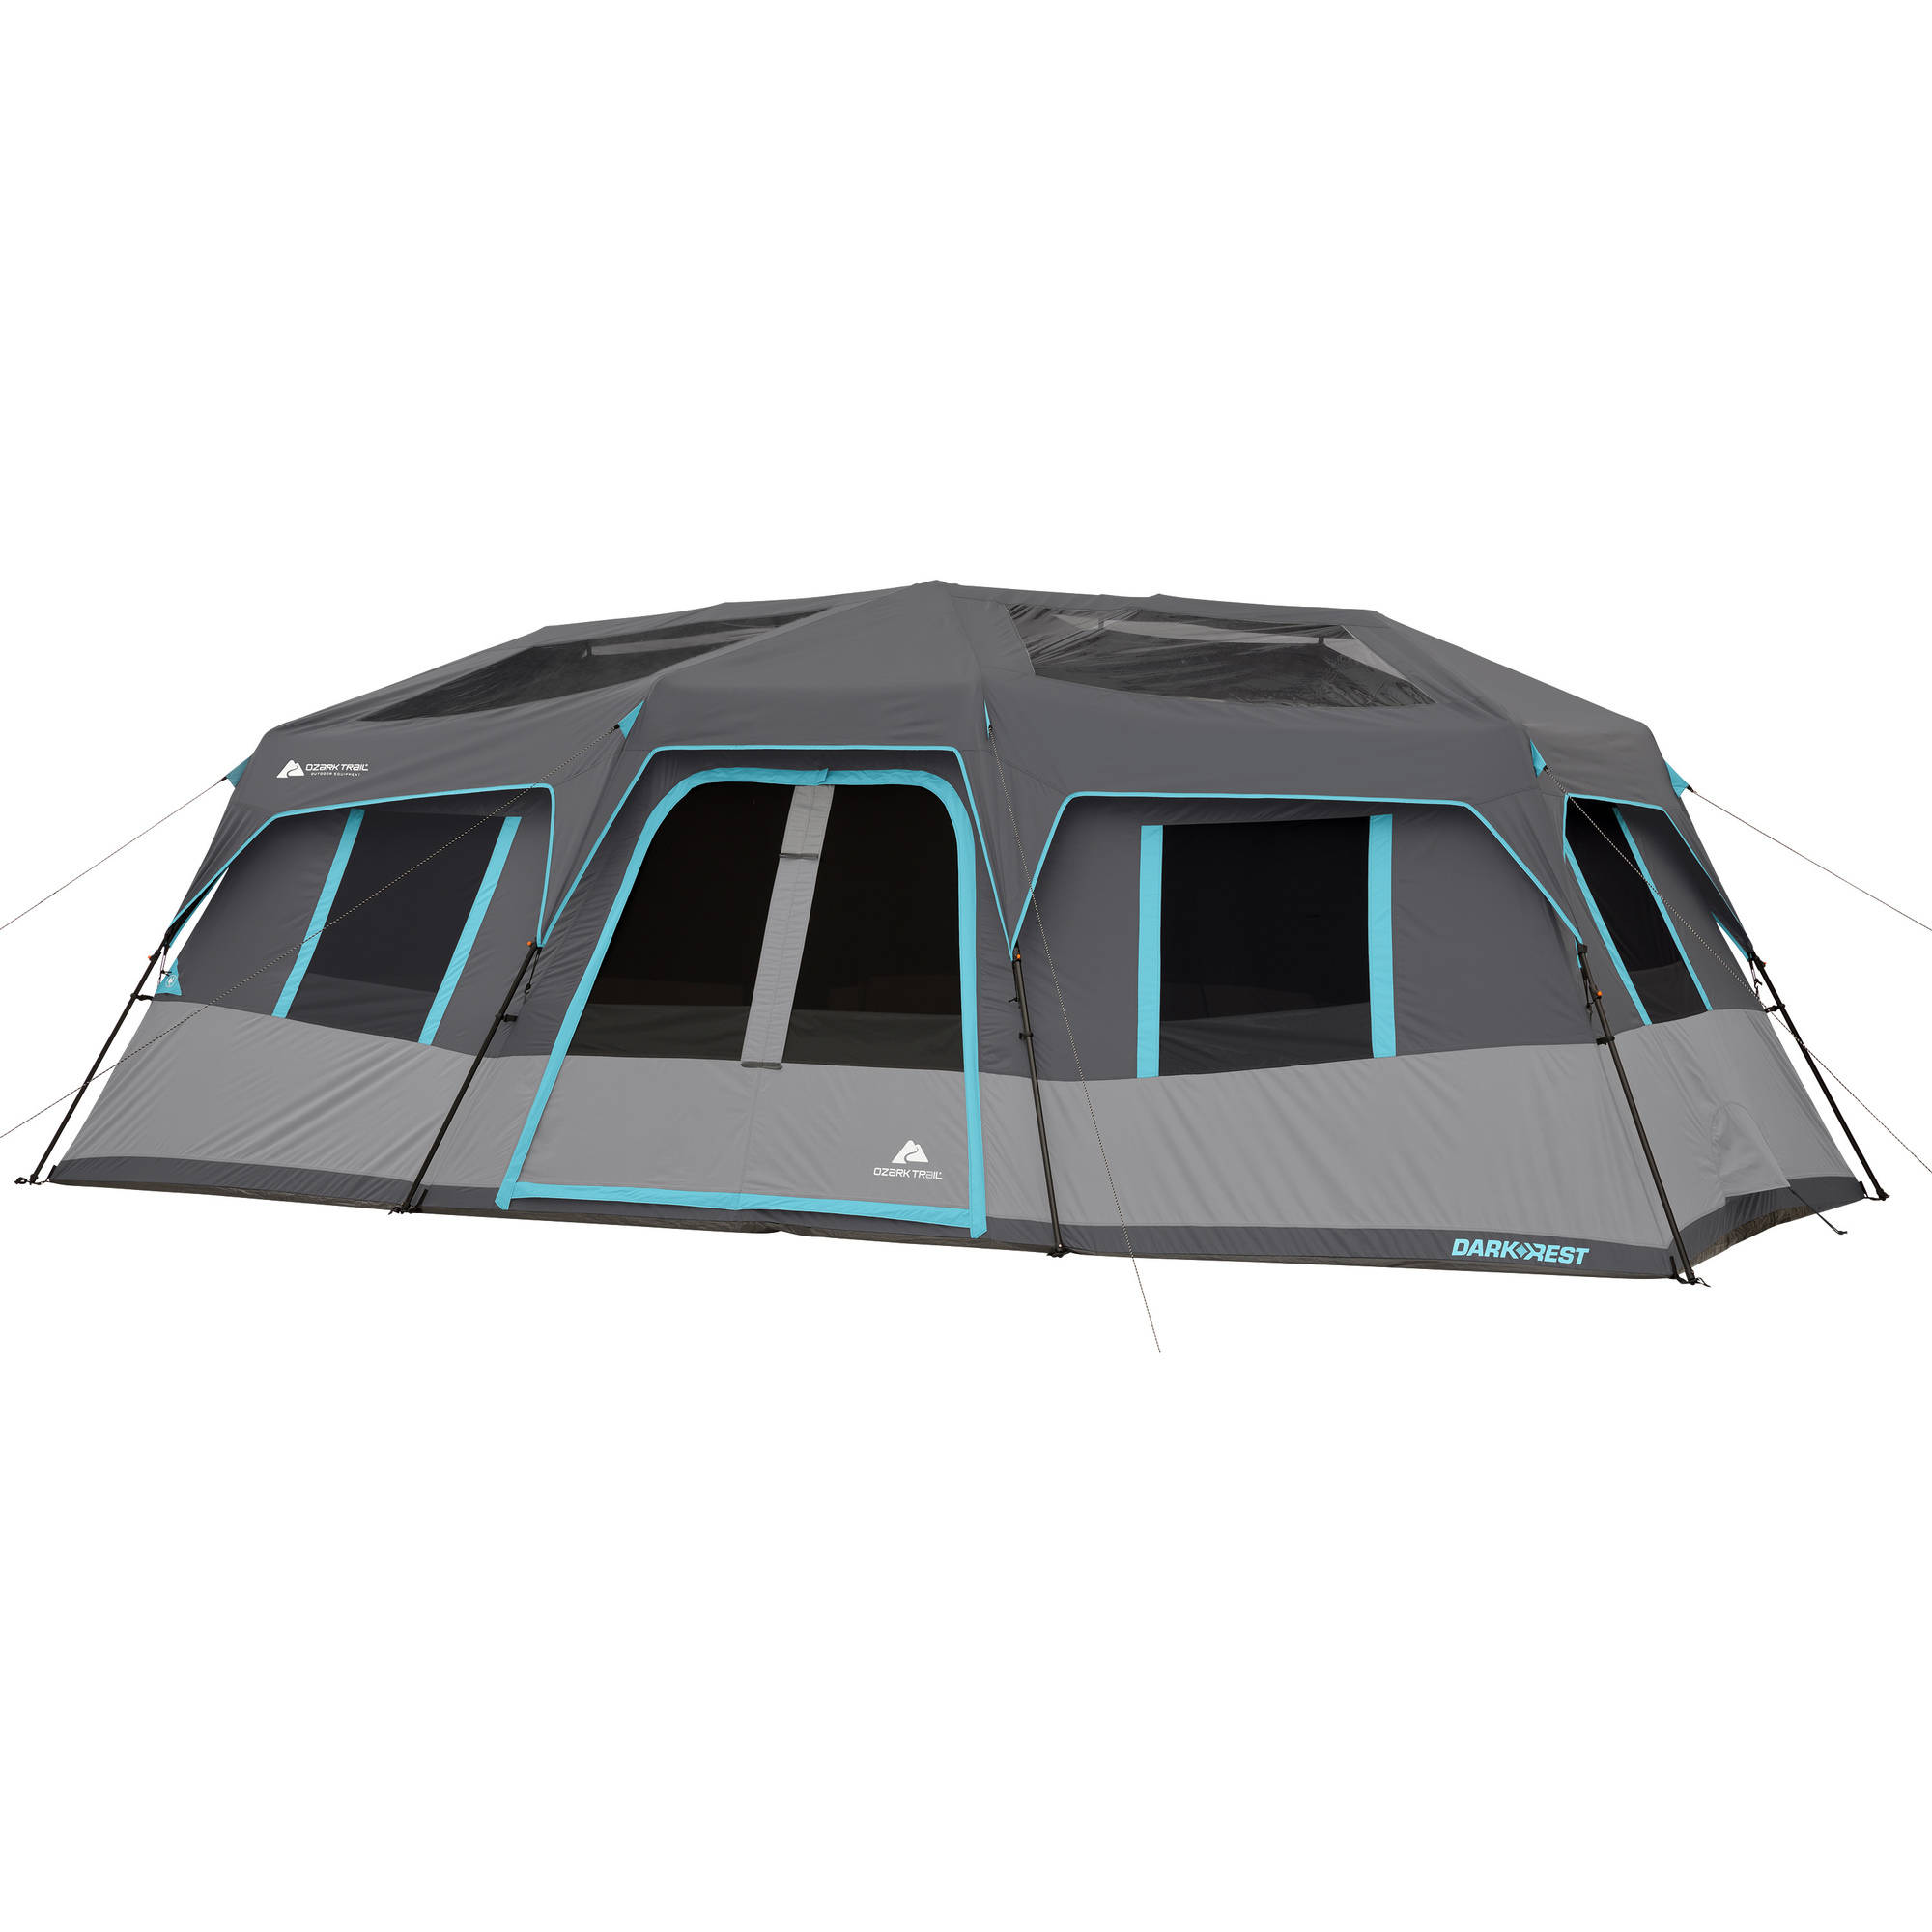 Ozark Trail 20' x 10' Dark Rest Instant Cabin Tent, Sleeps 12, 45.72 lbs - image 1 of 9